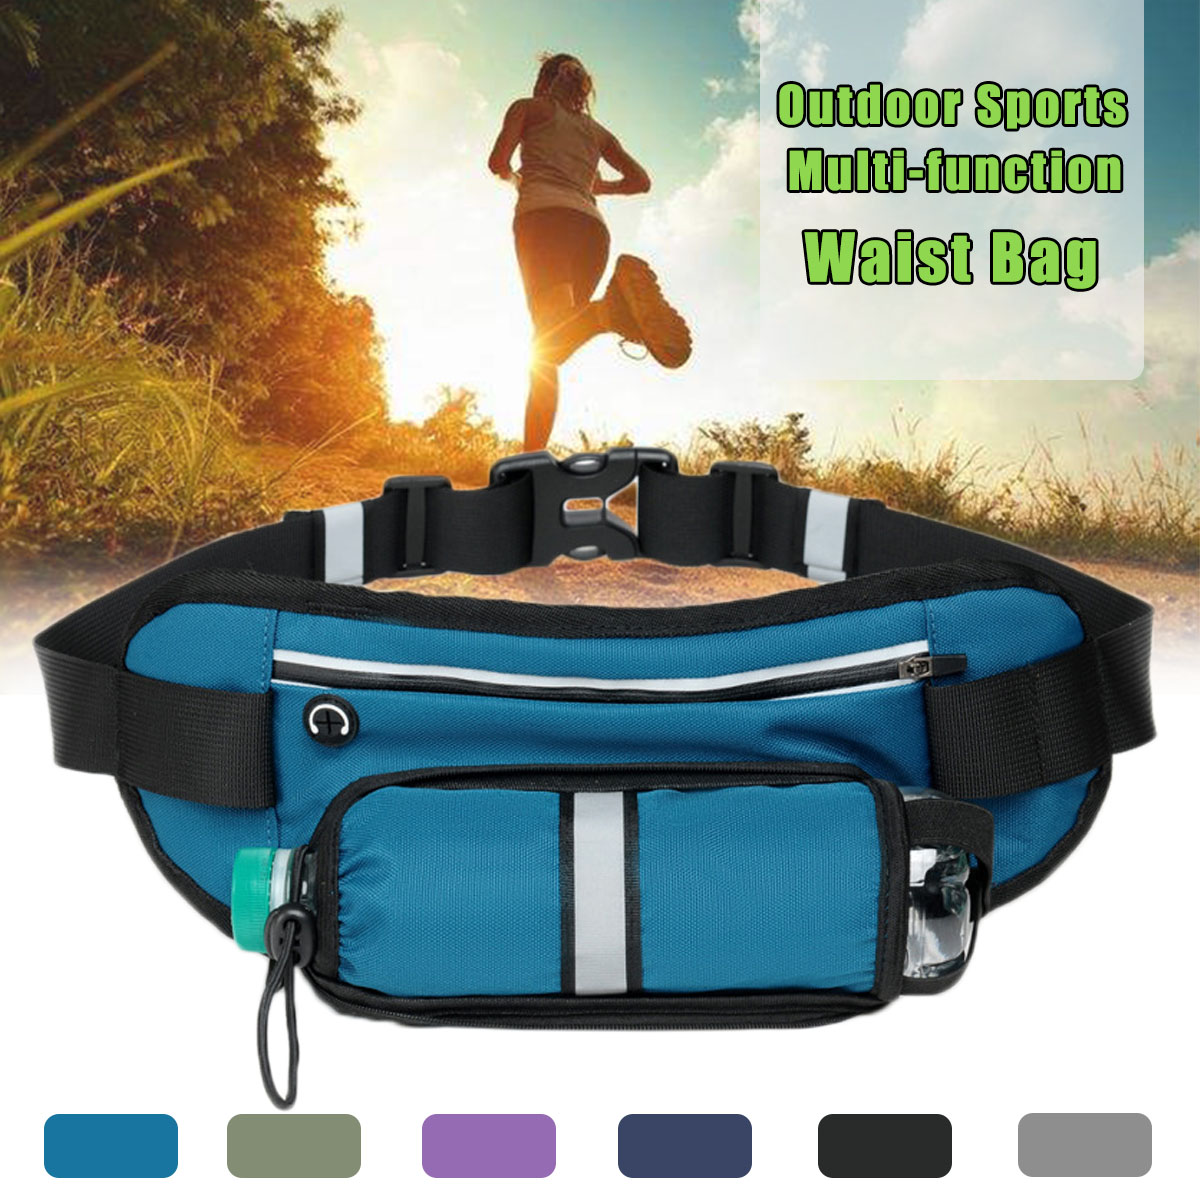 Outdoor-Sports-Waist-Bag-Phone-Bag-Crossbody-Bag-With-Bottle-Holder-For-Running-Hiking-Climbing-1529184-1